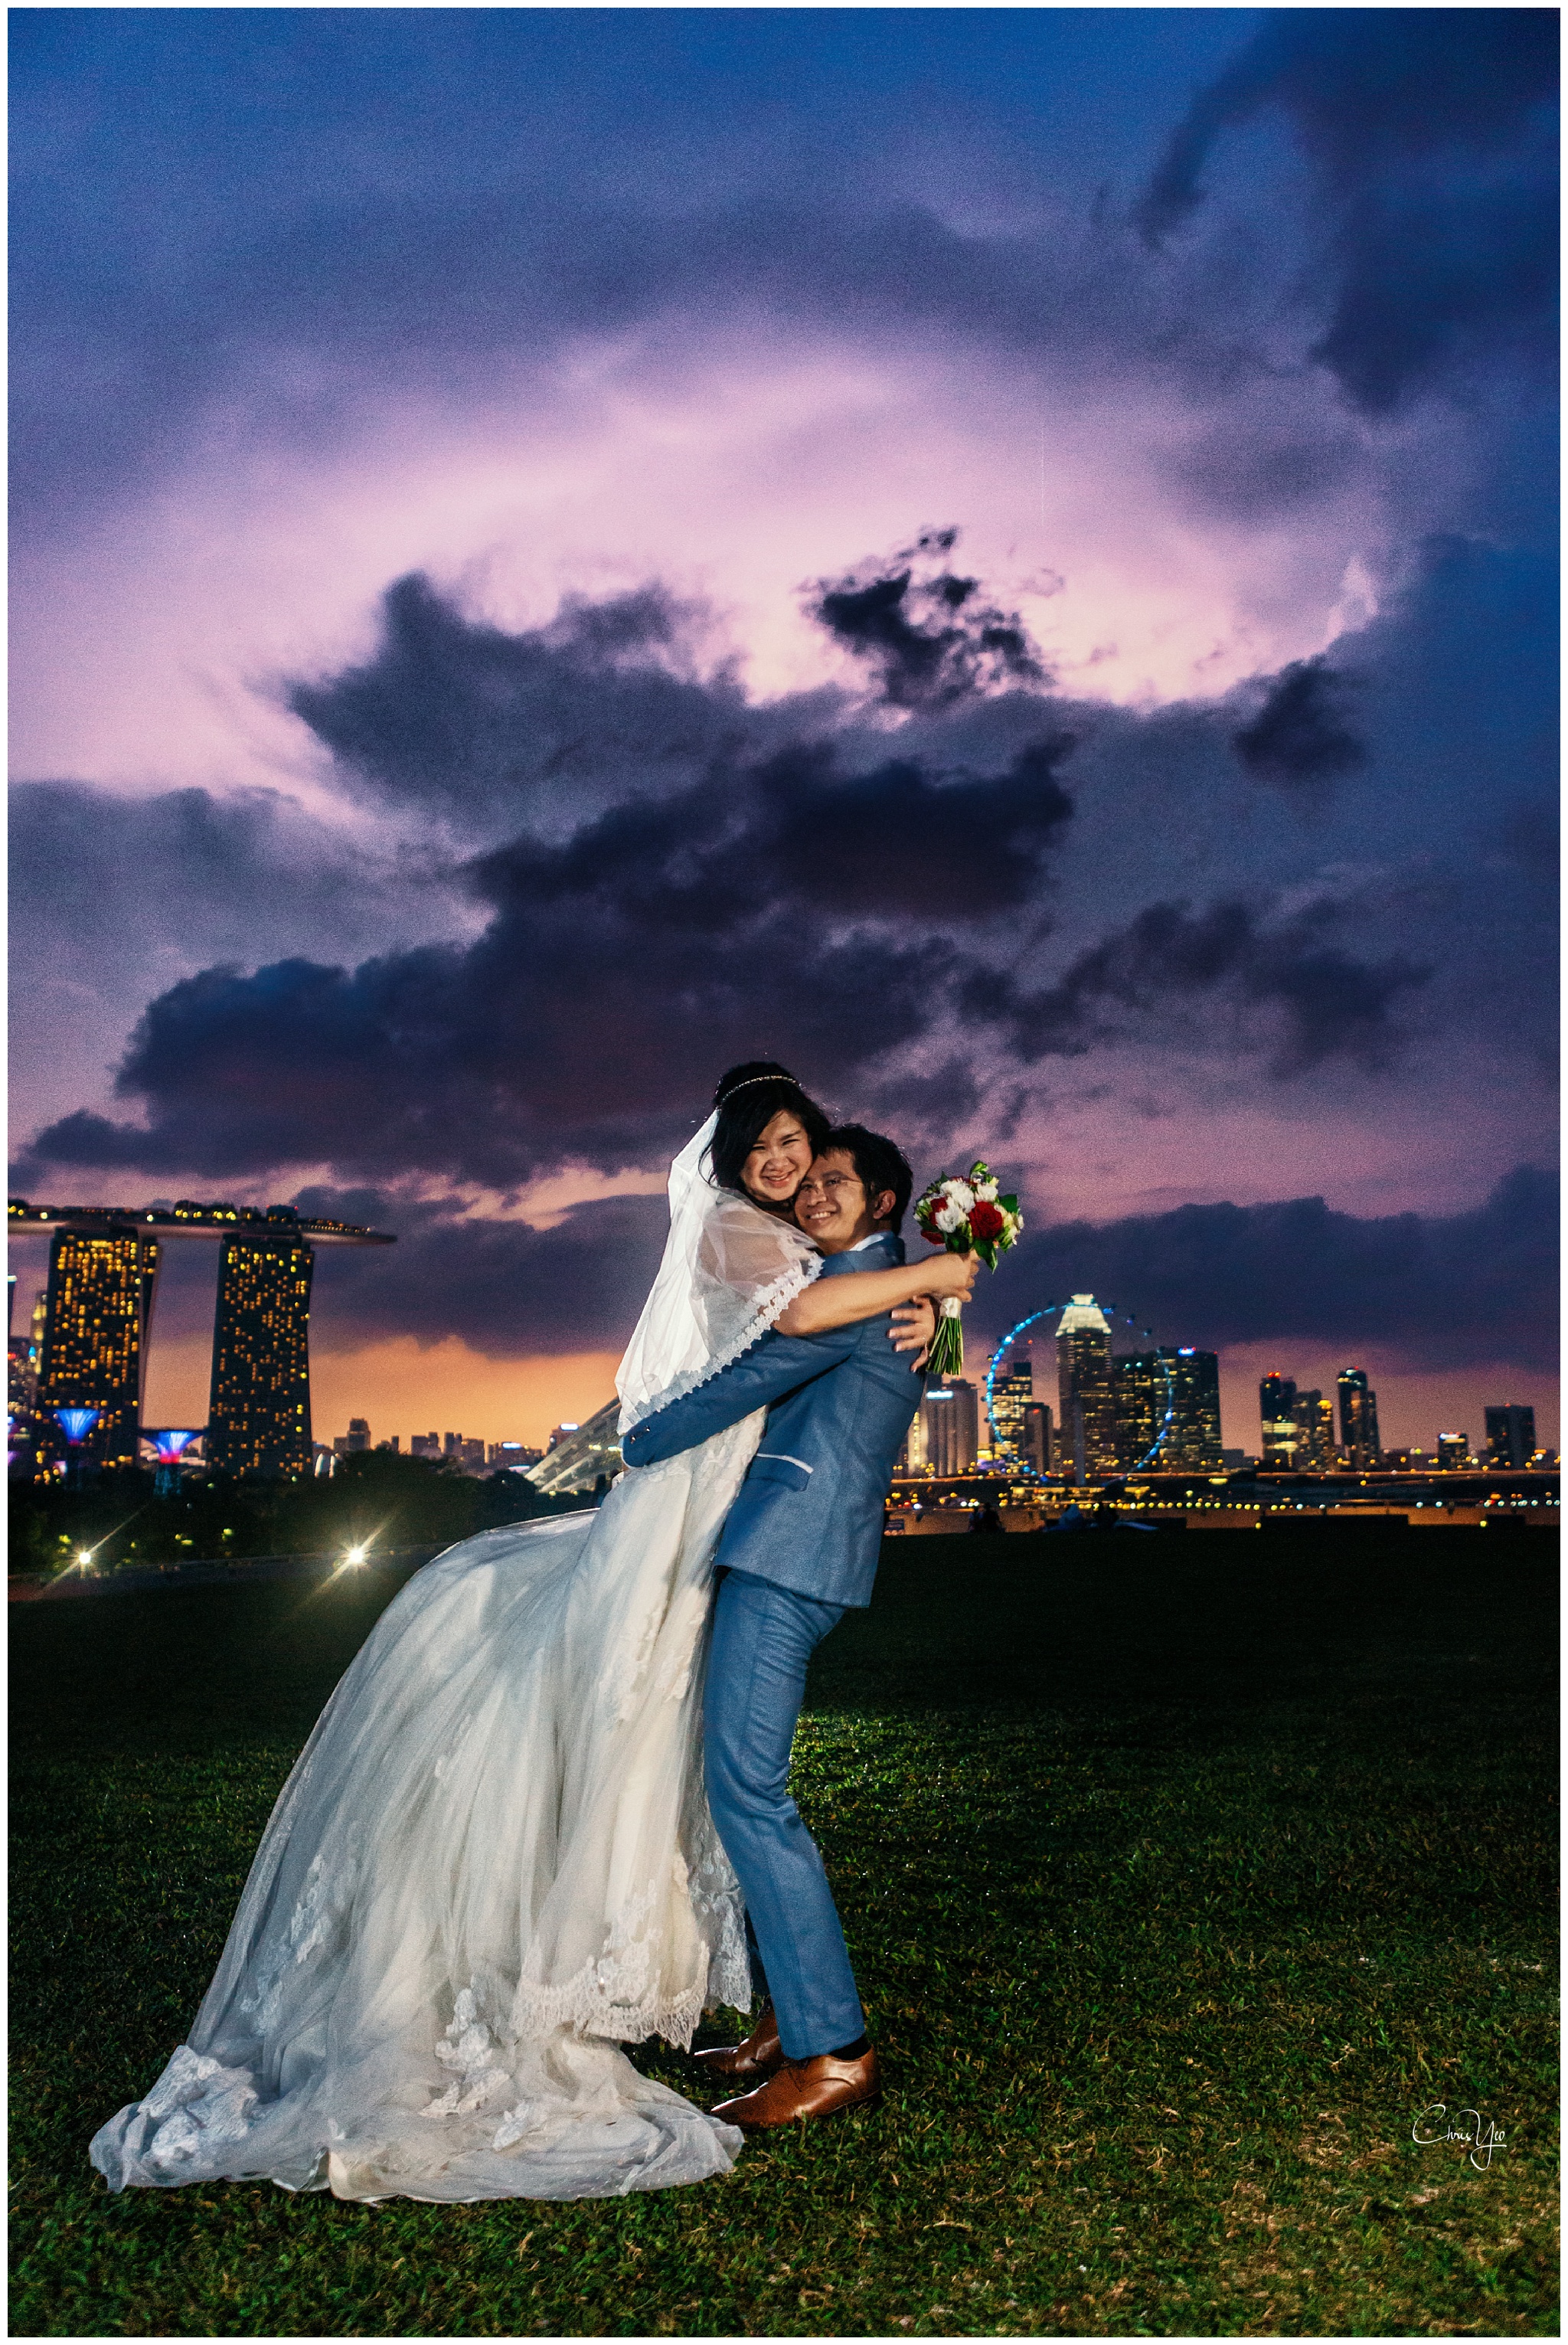 Prewedding Photography Singapore Marina Barrage